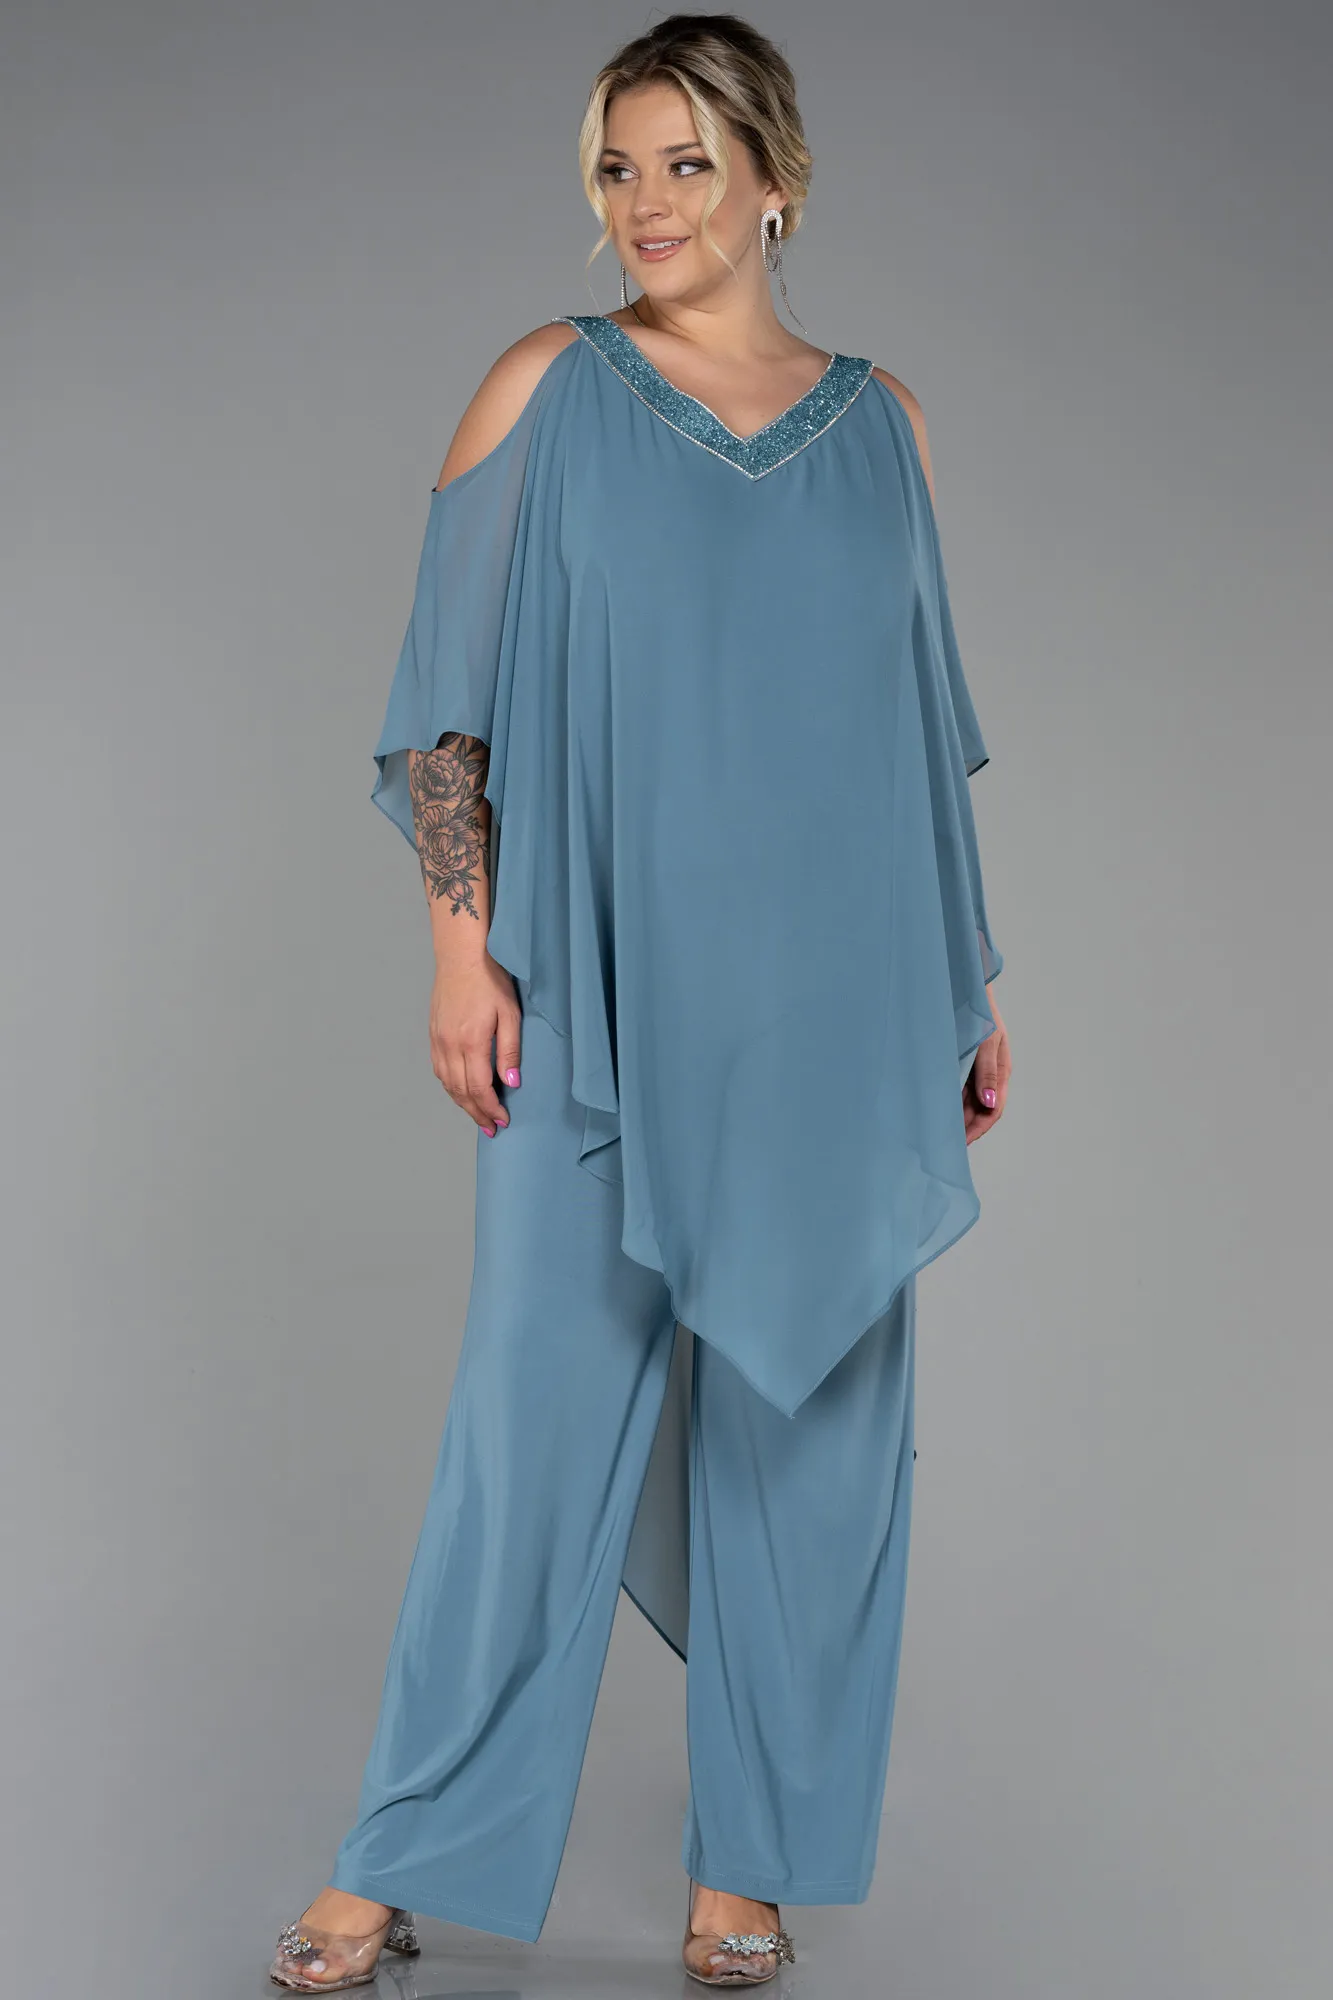 Turquoise-Chiffon Plus Size Evening Dress ABT096